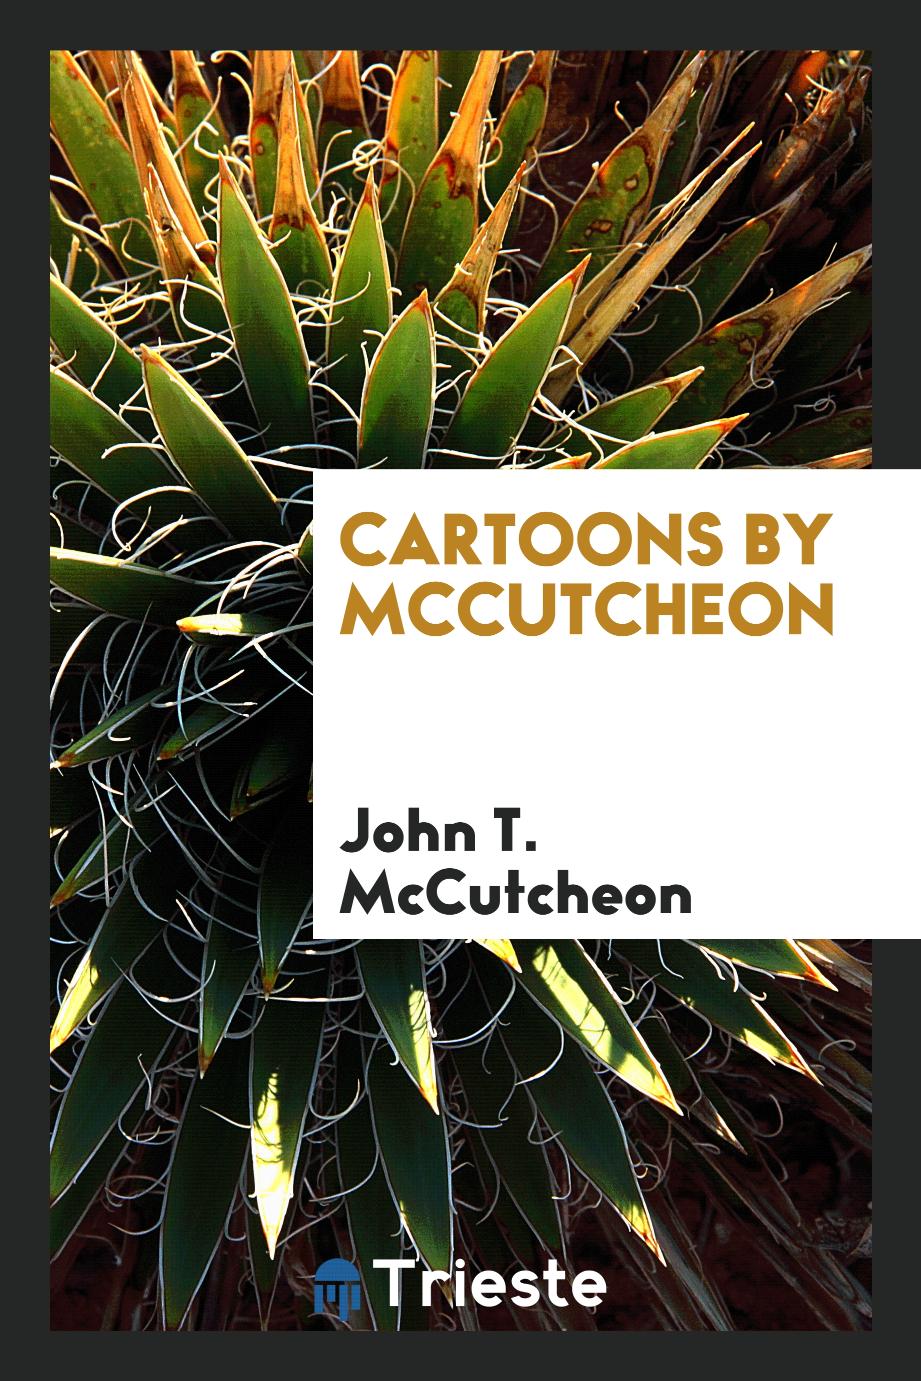 Cartoons by McCutcheon